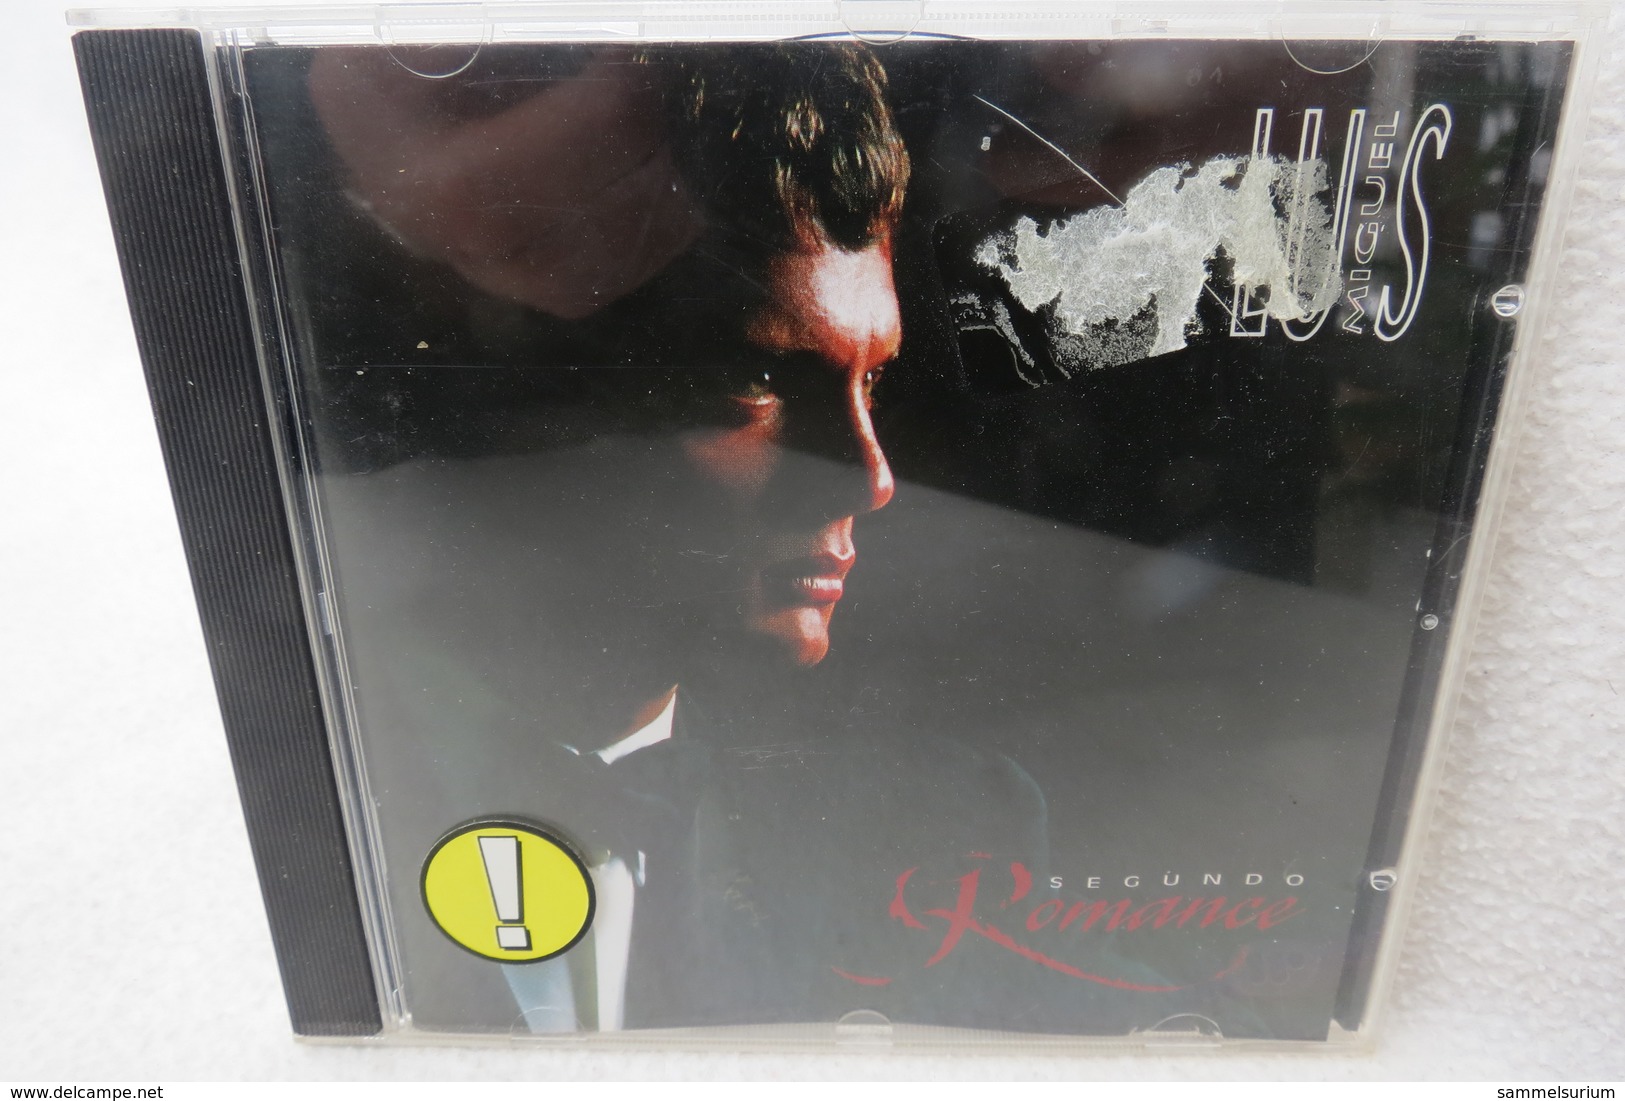 CD "Luis Miguel" Segundo Romance - Wereldmuziek